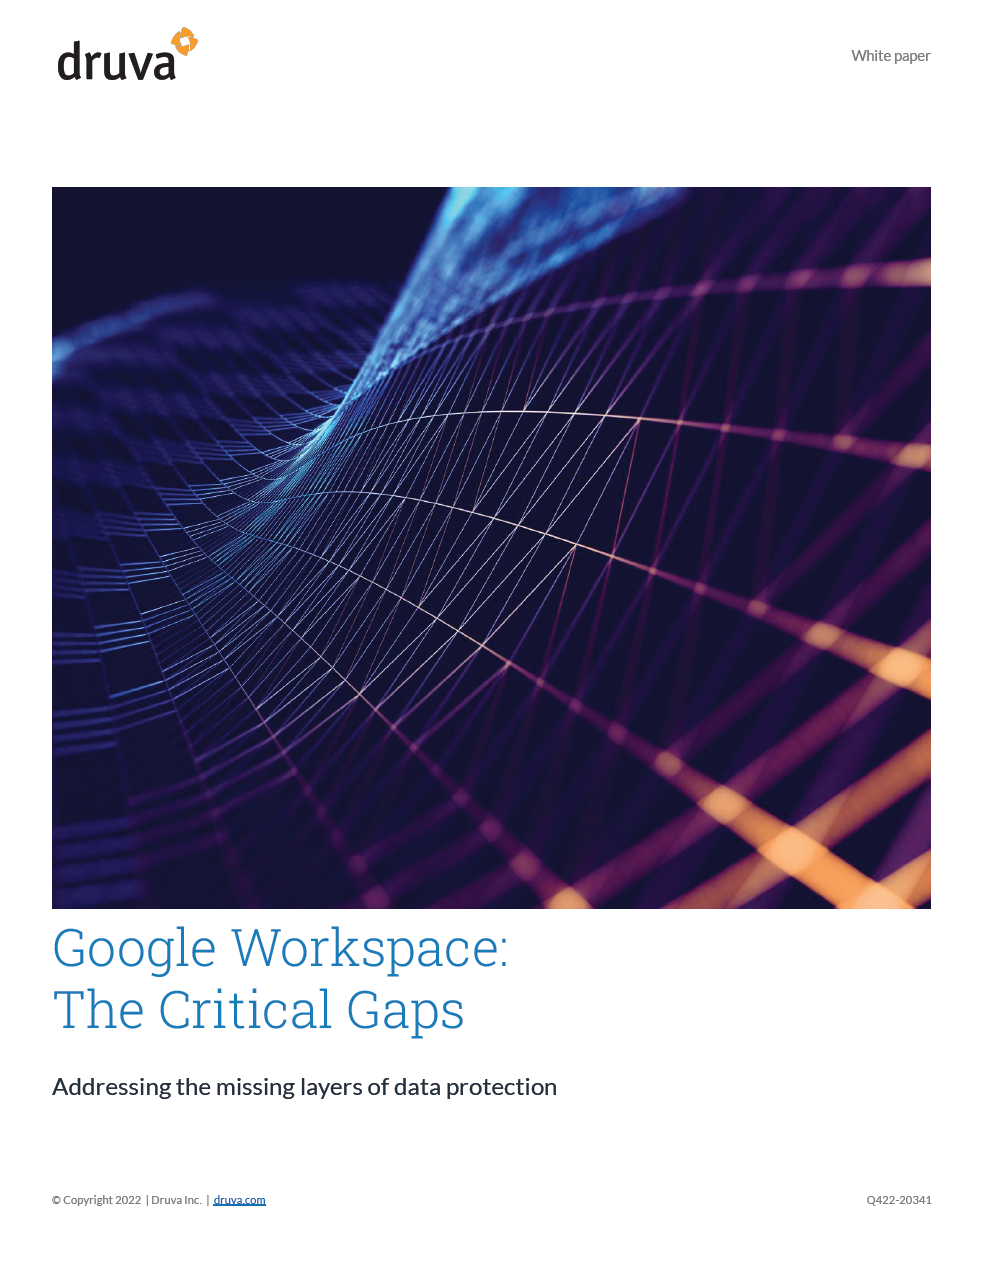 Google Workspace: The critical gaps